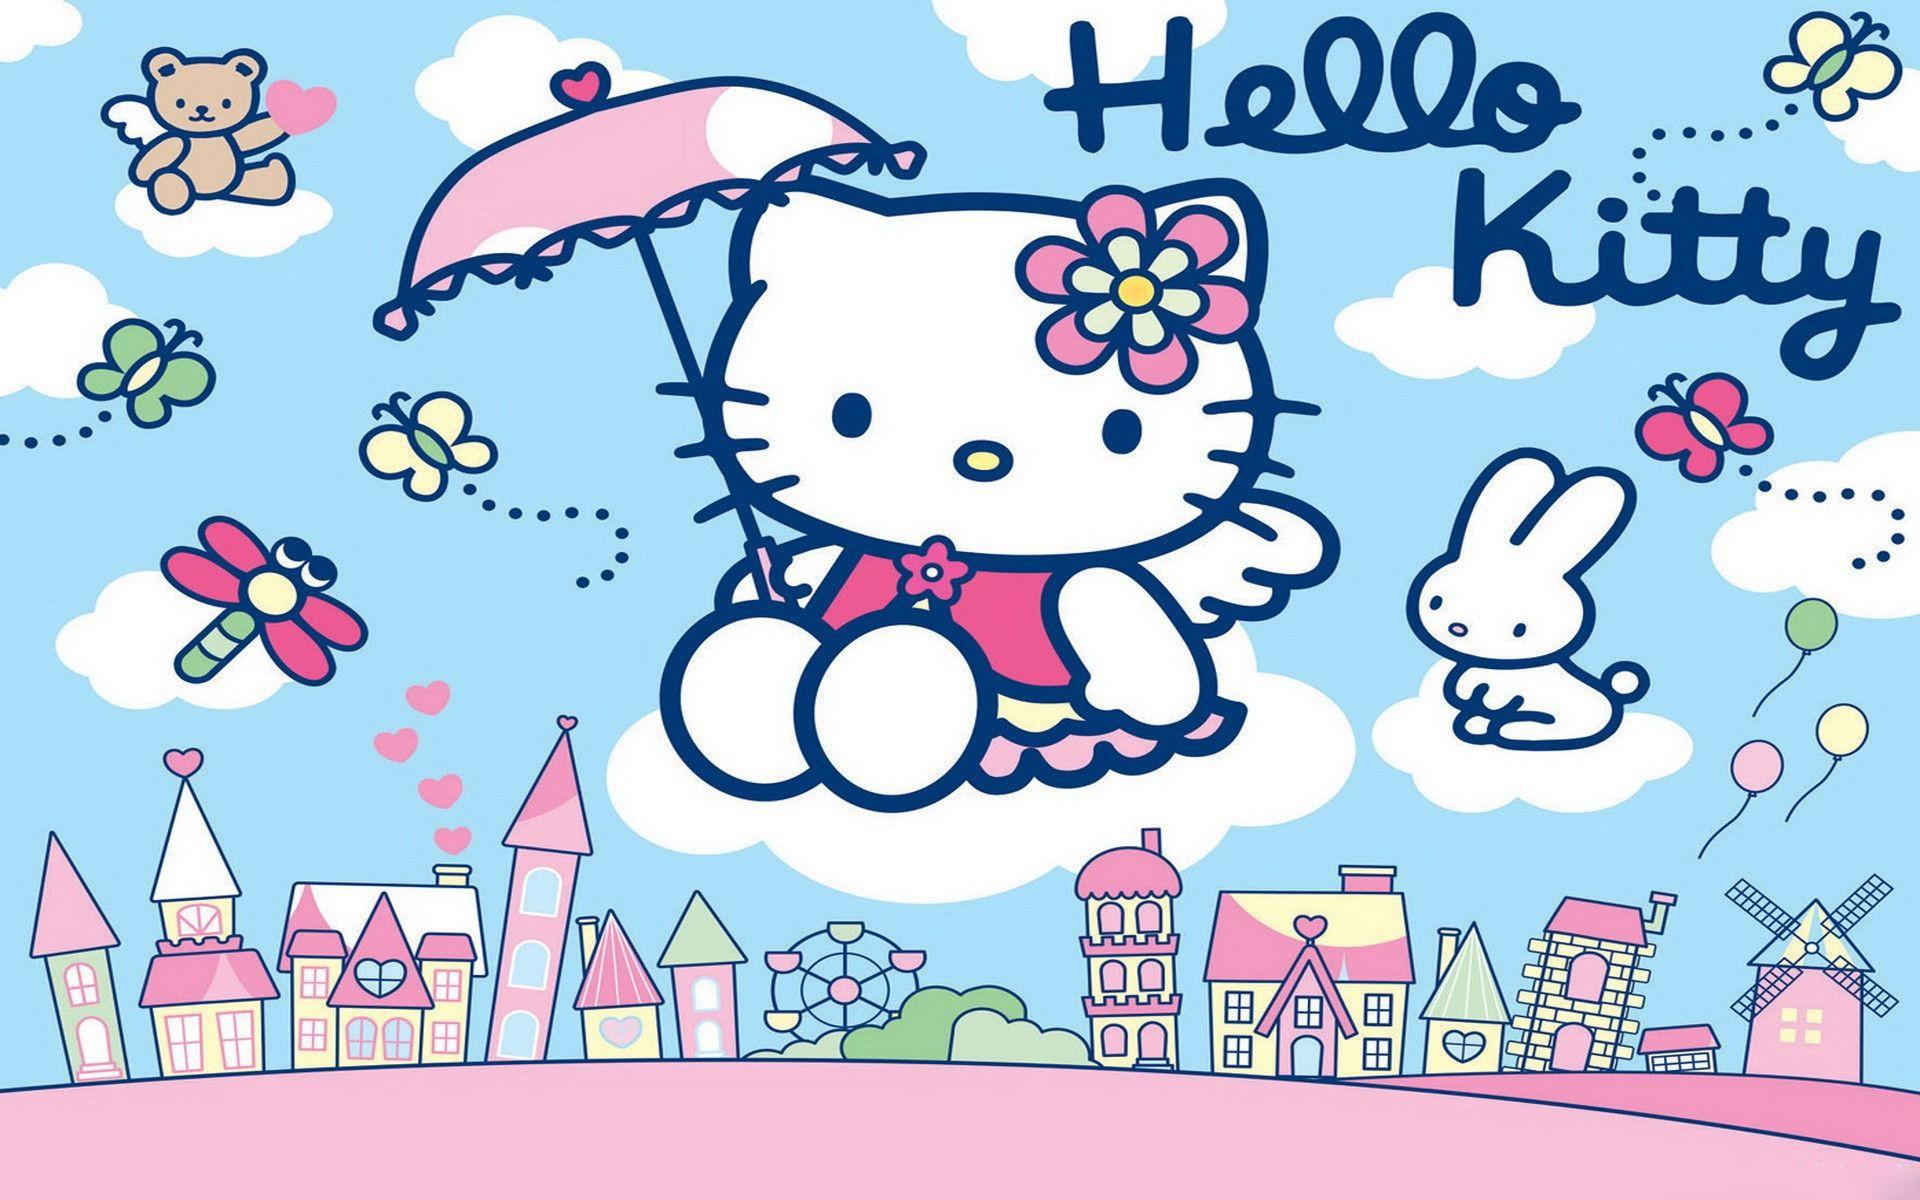 download wallpaper hello kitty terbaru wallpaper.wiki hello kitty